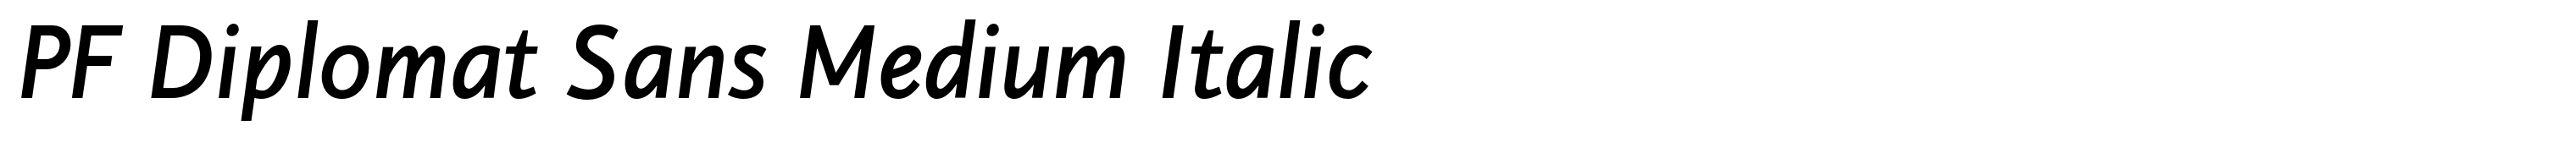 PF Diplomat Sans Medium Italic